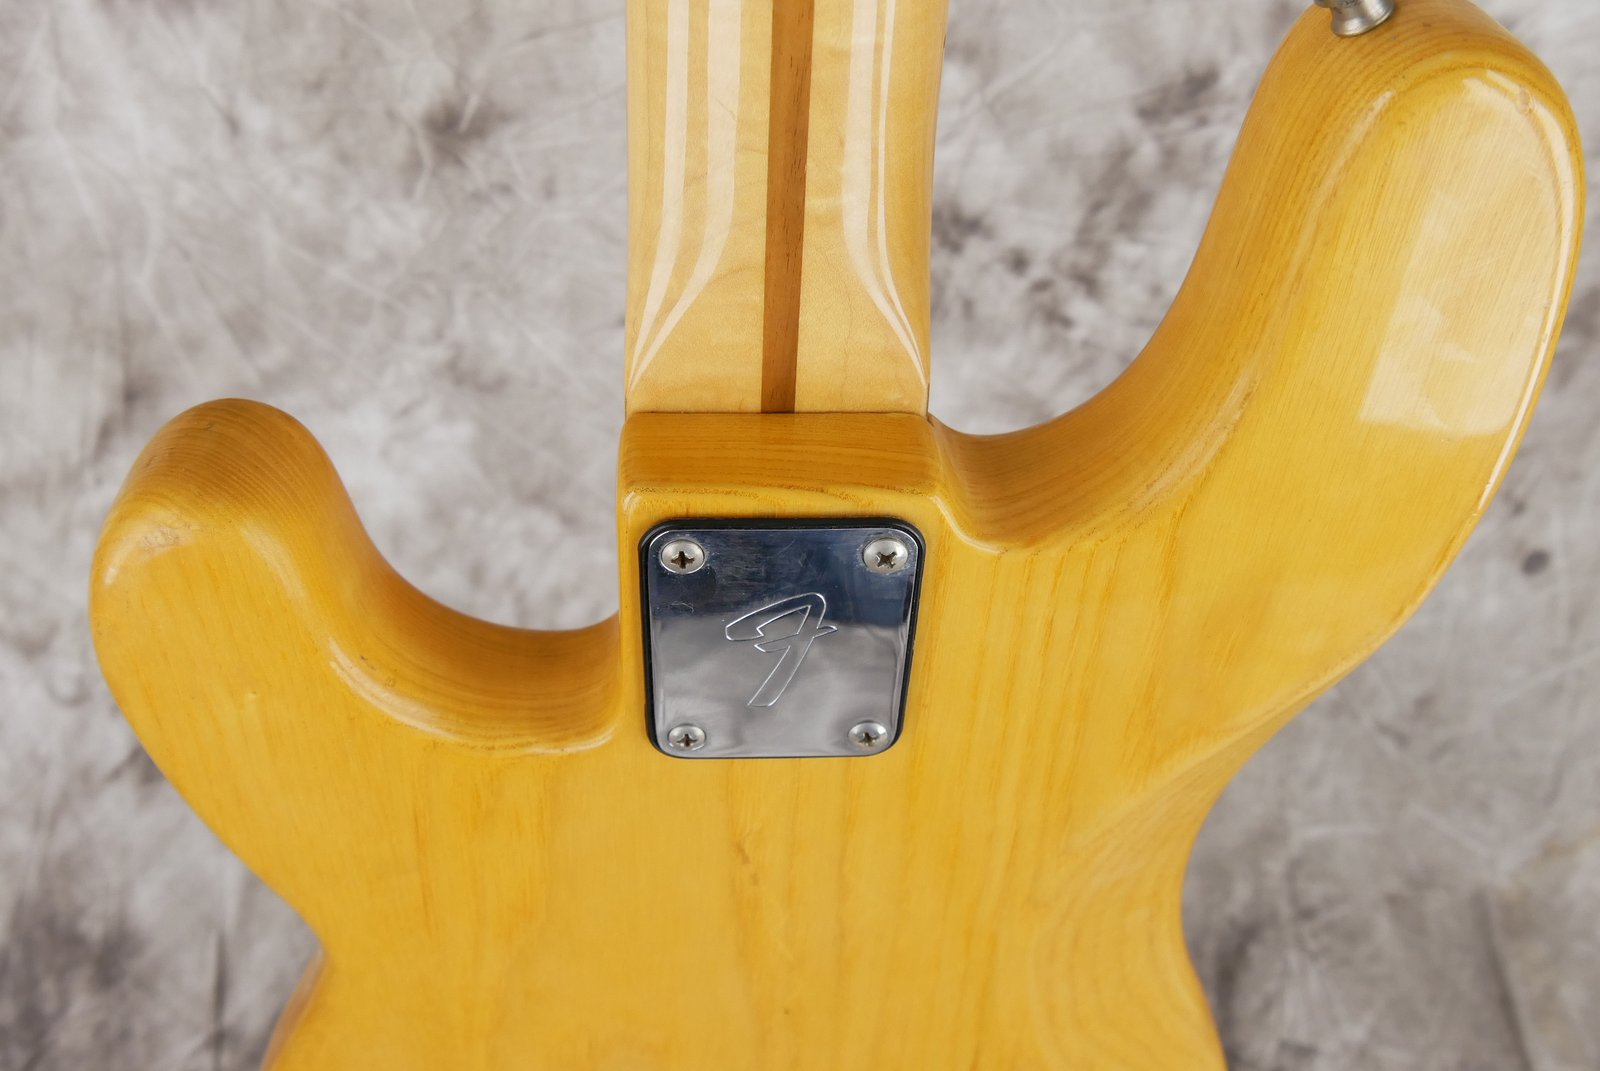 Fender-Precision-Bass-fretless-natural-1980-013.JPG